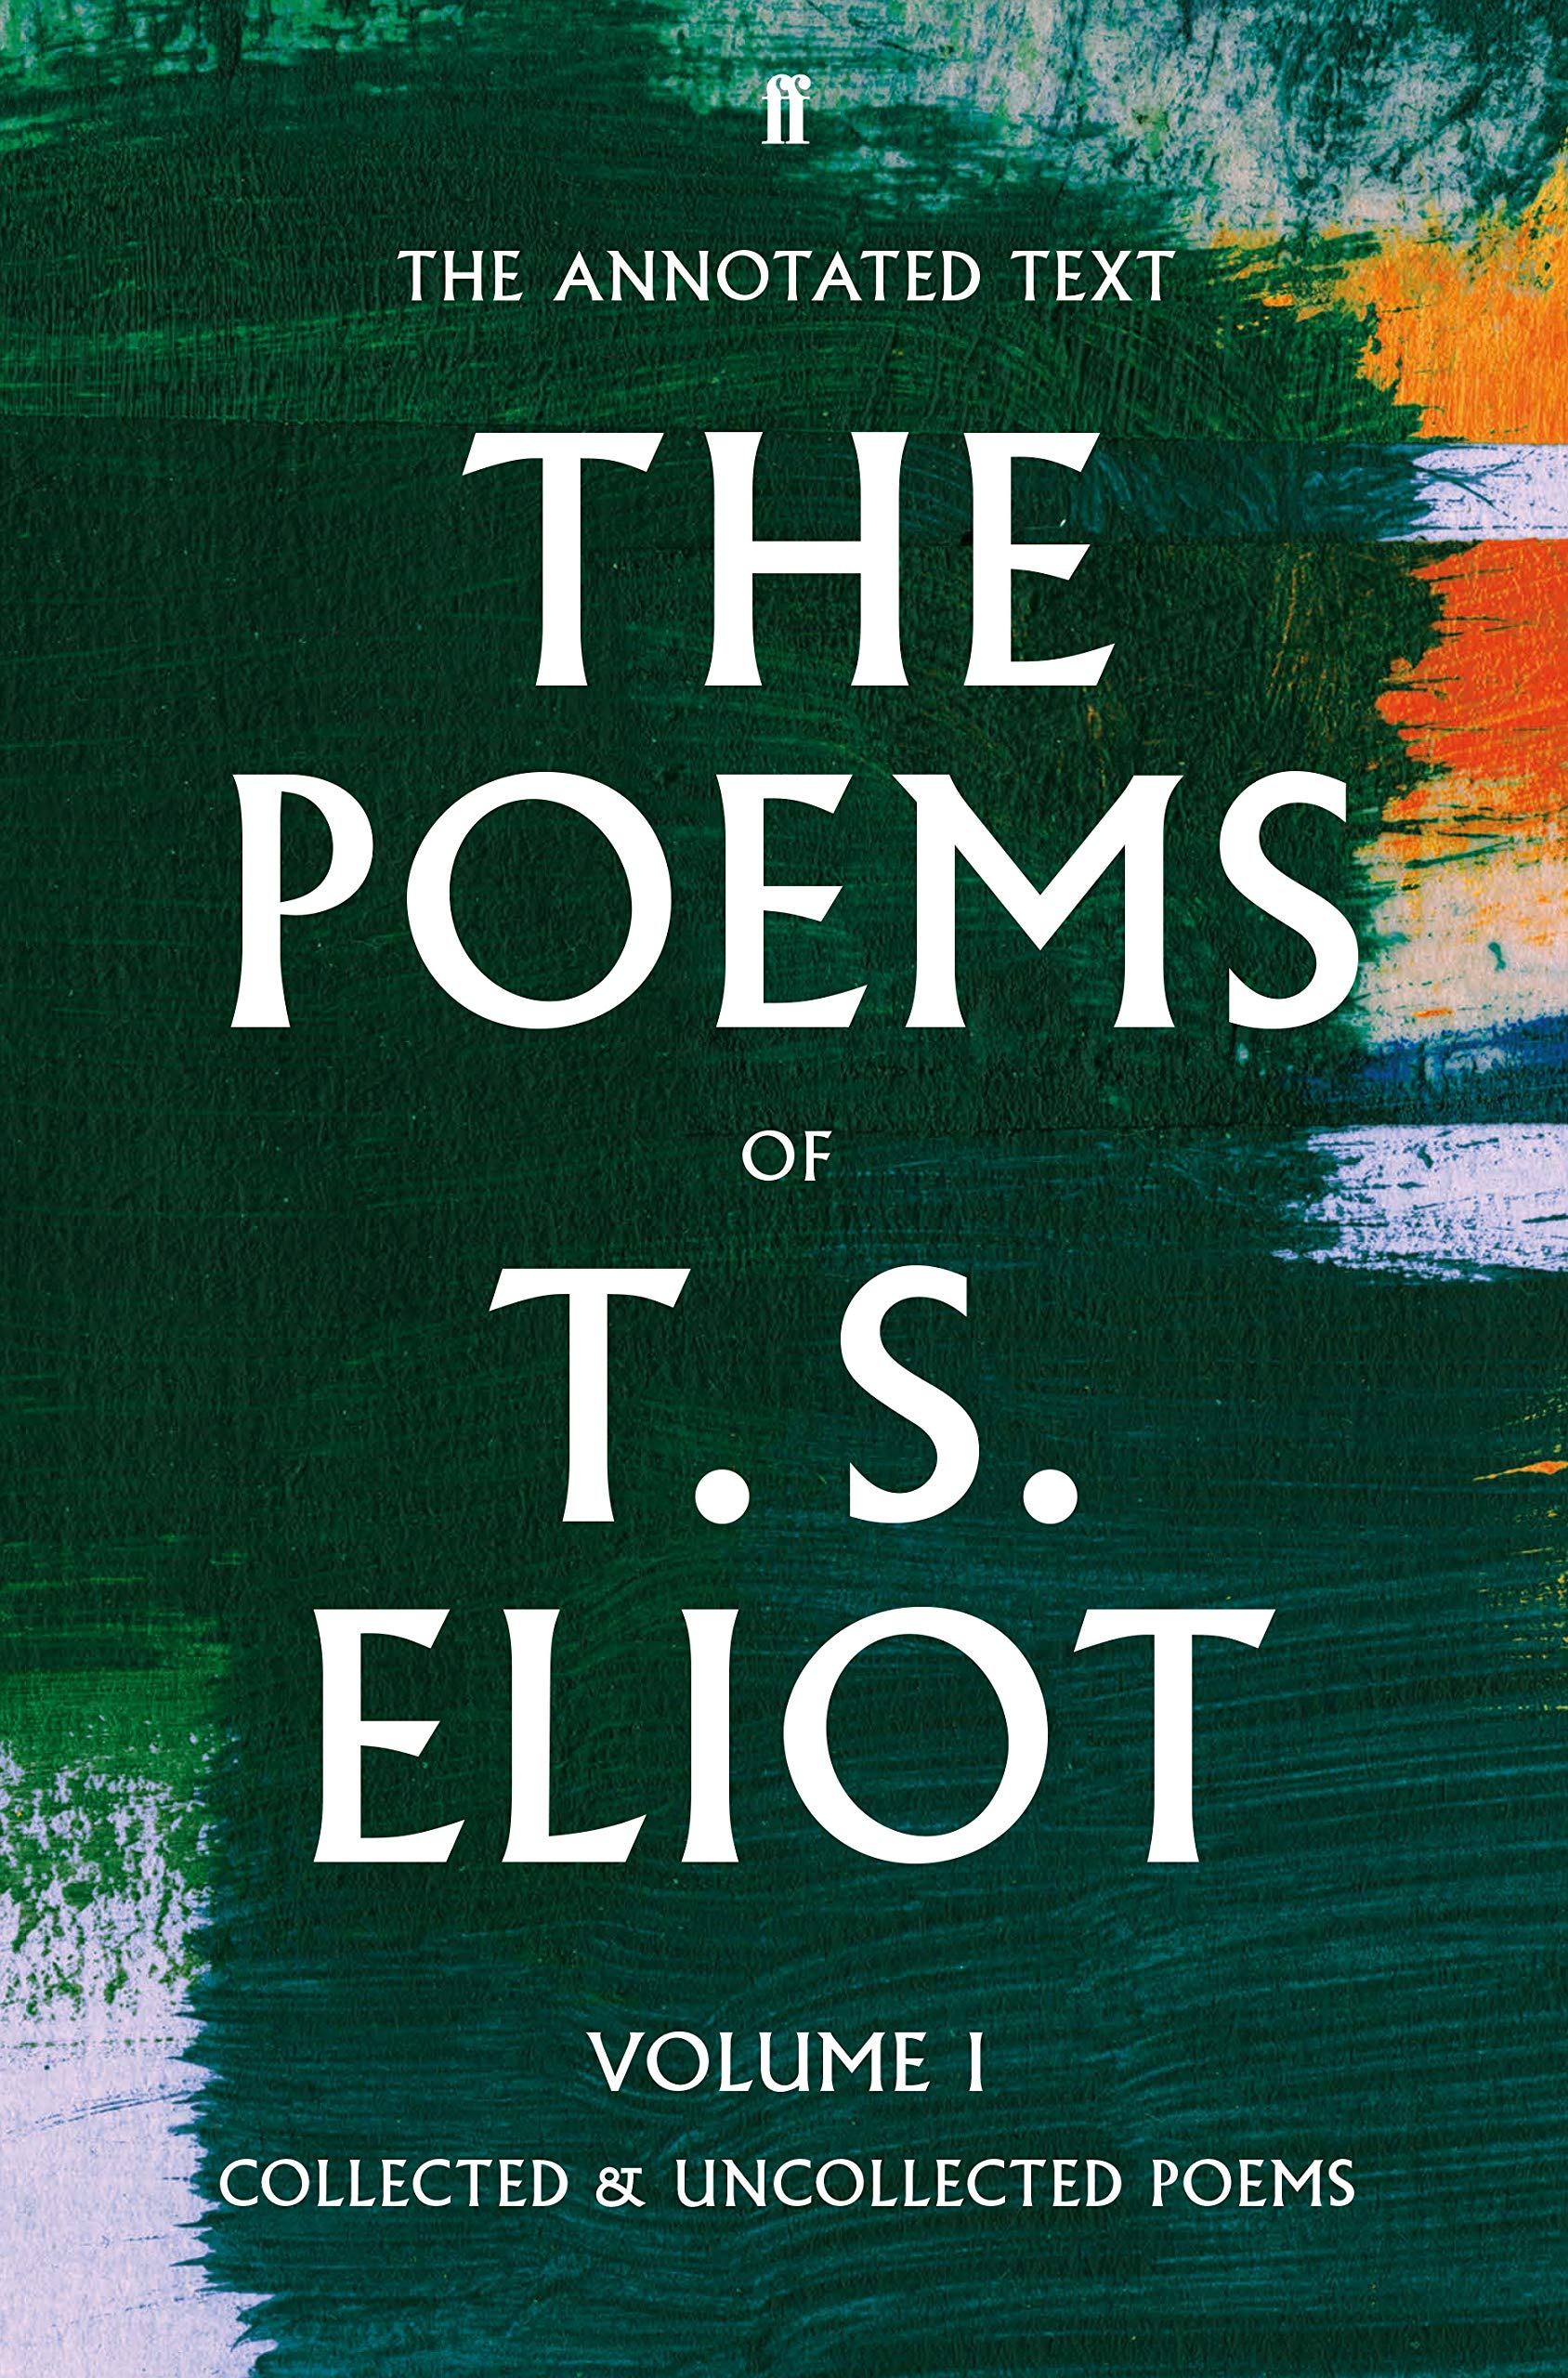 The Poems of T. S. Eliot, Volume I